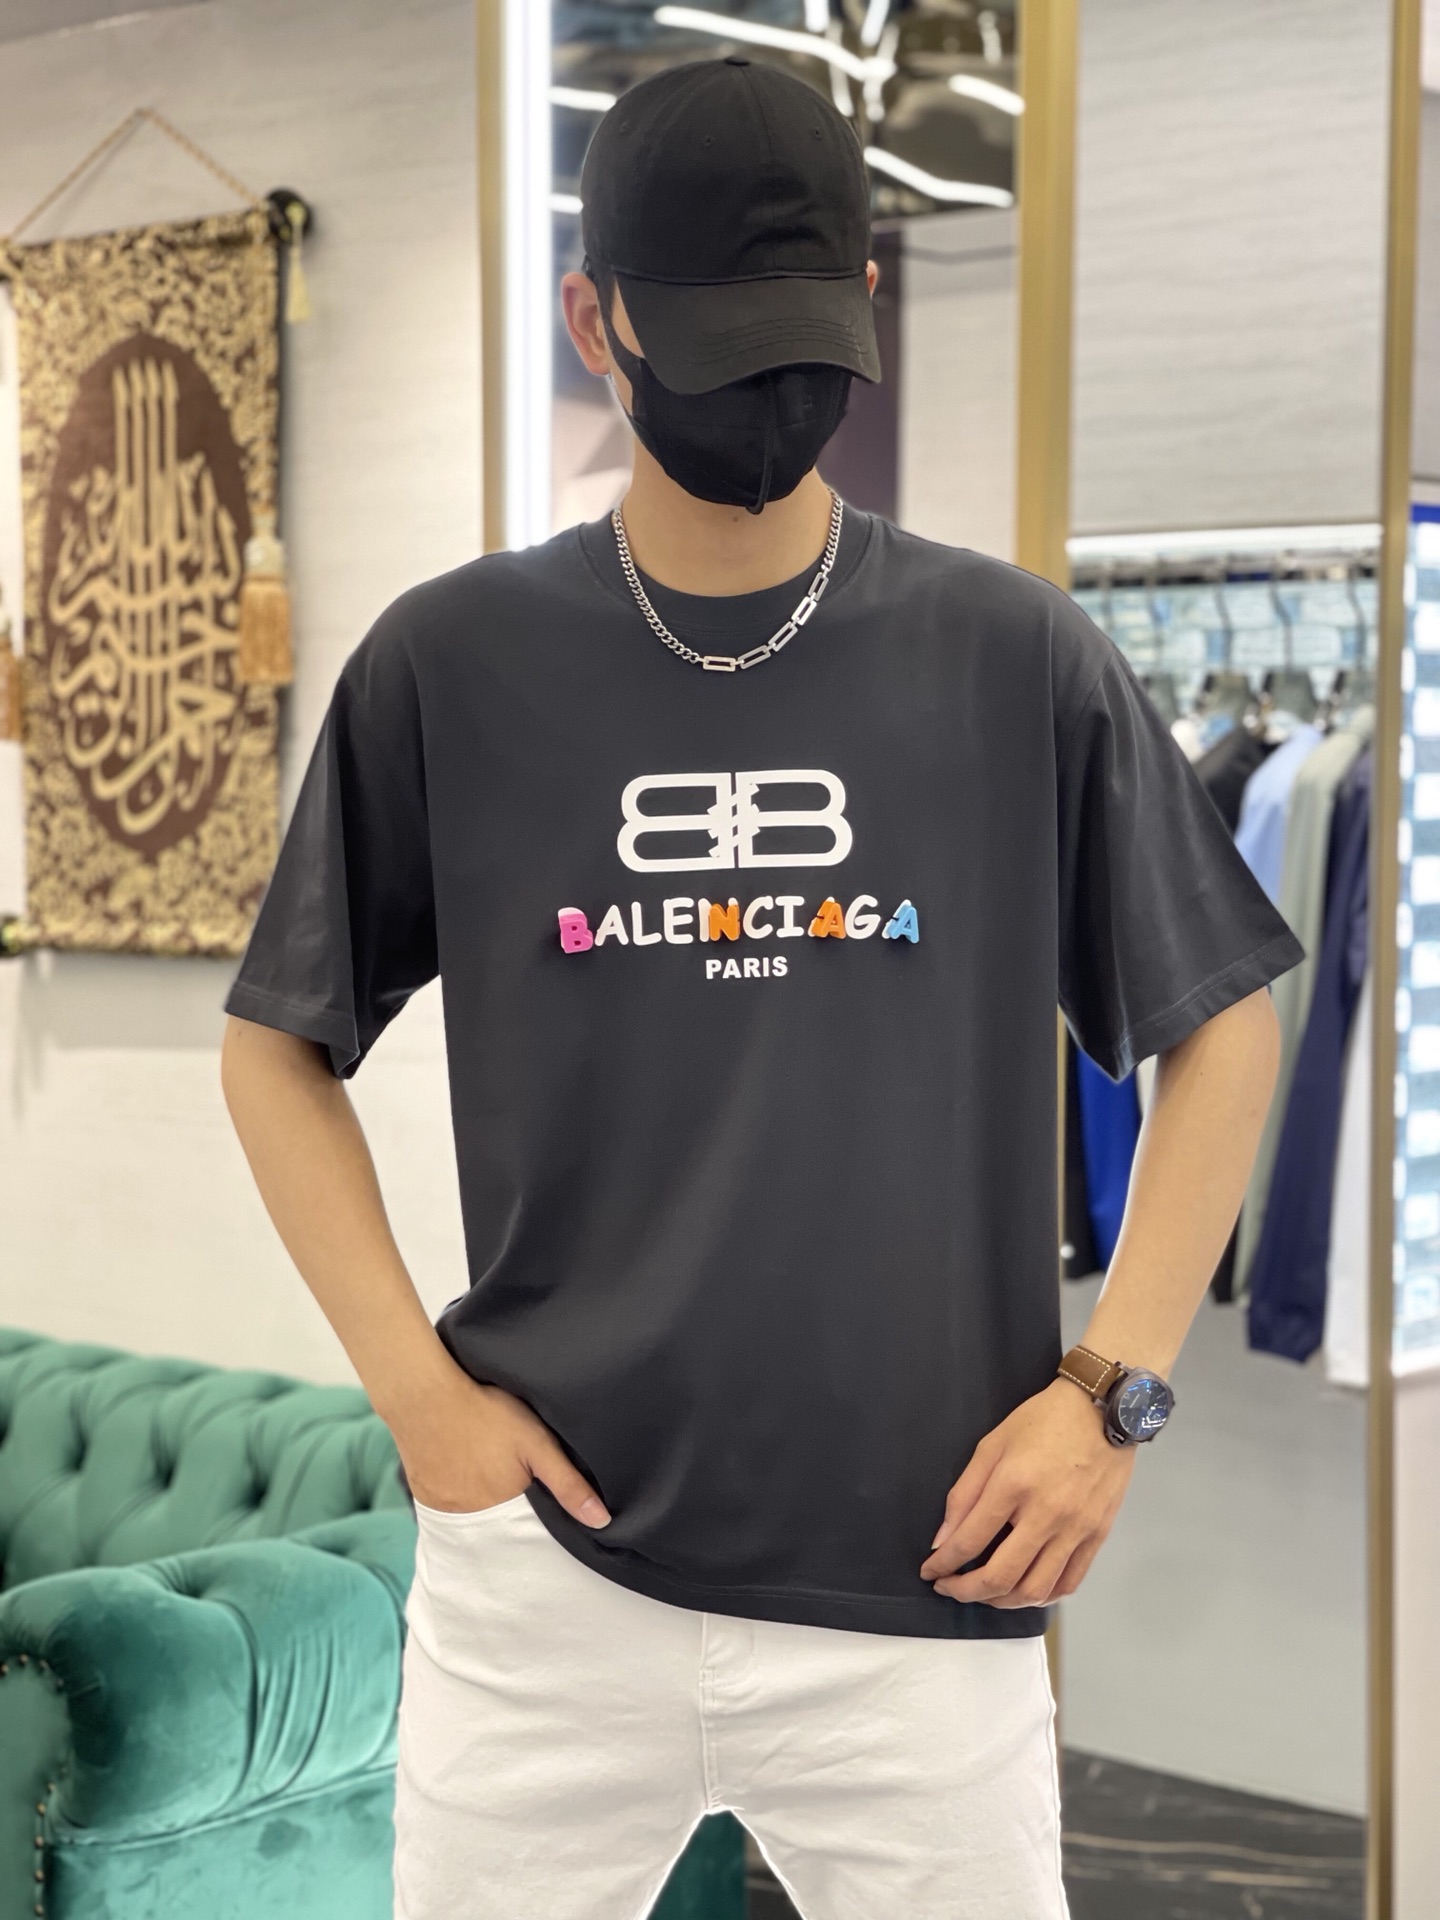 BALENCIAGA 발렌시아가 로고 티셔츠 (공용)